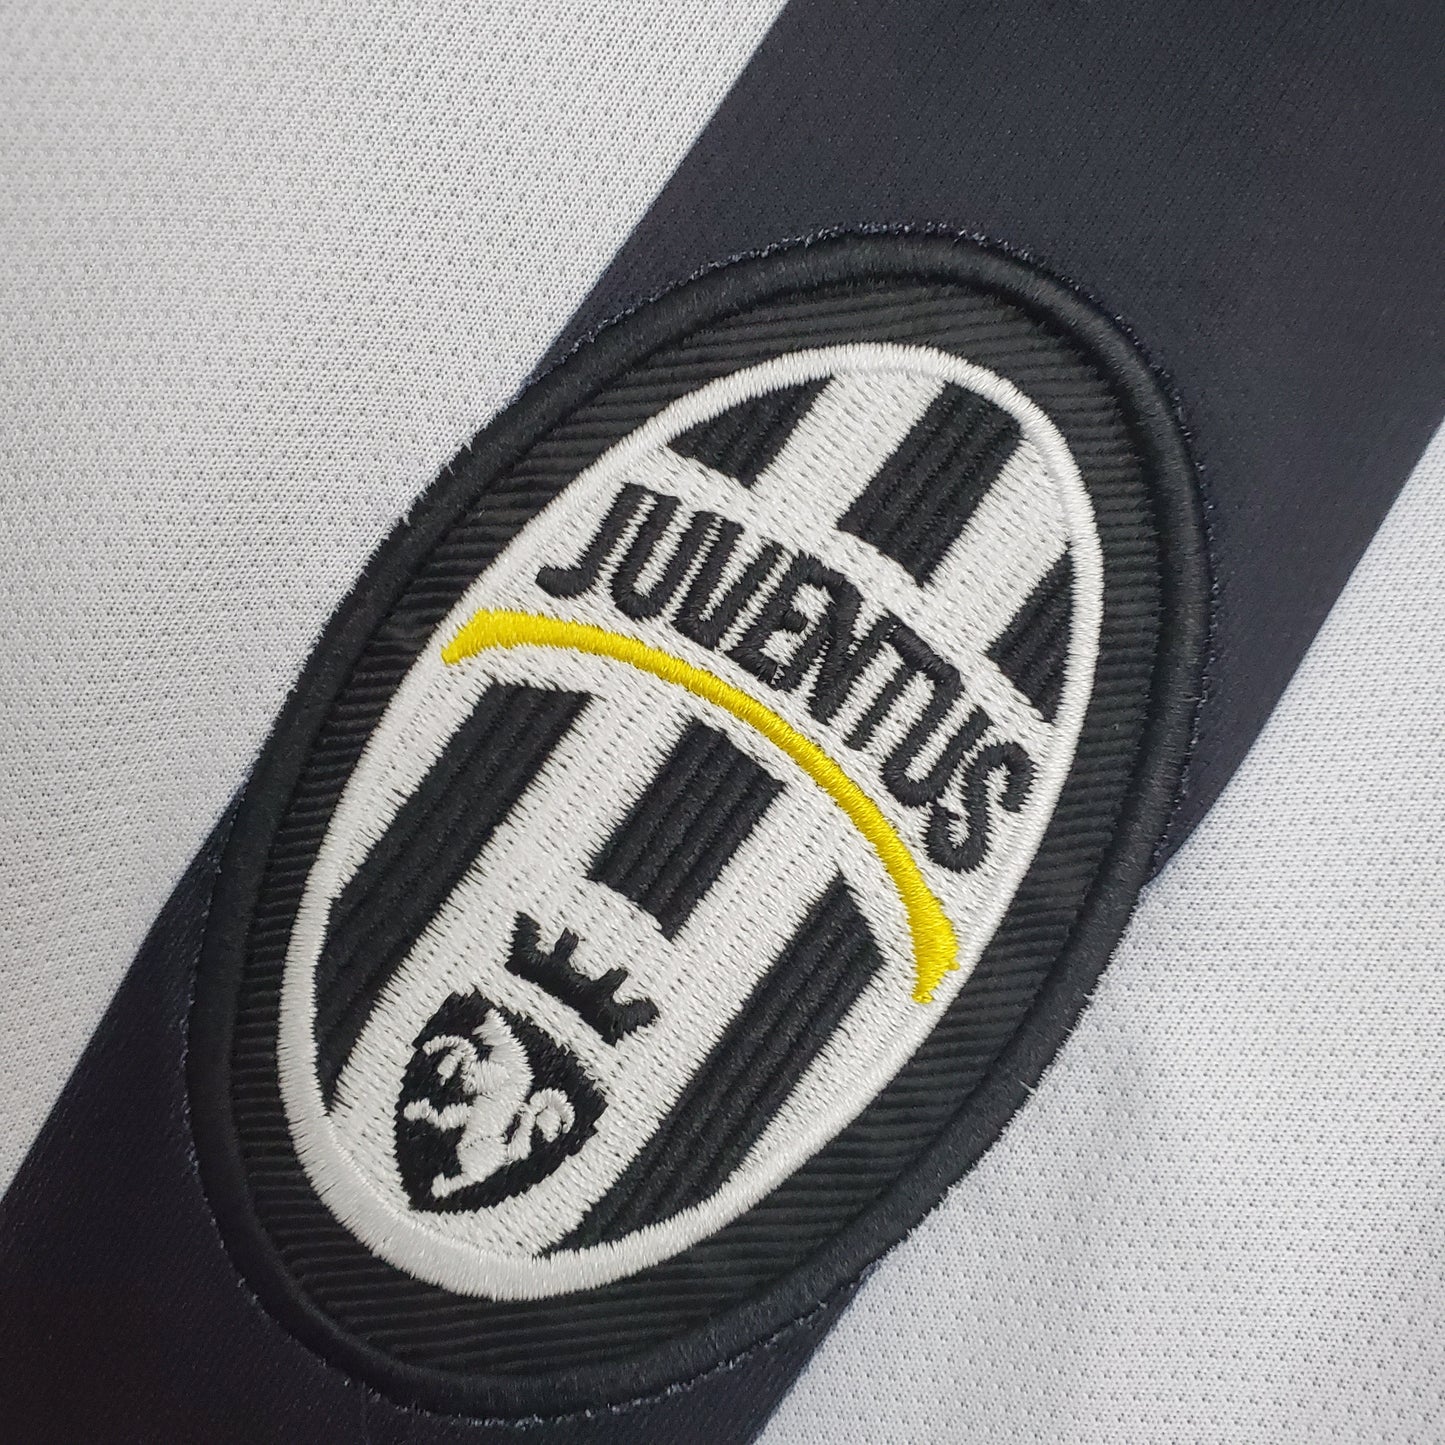 Camisa Retrô Juventus Home 2014/15